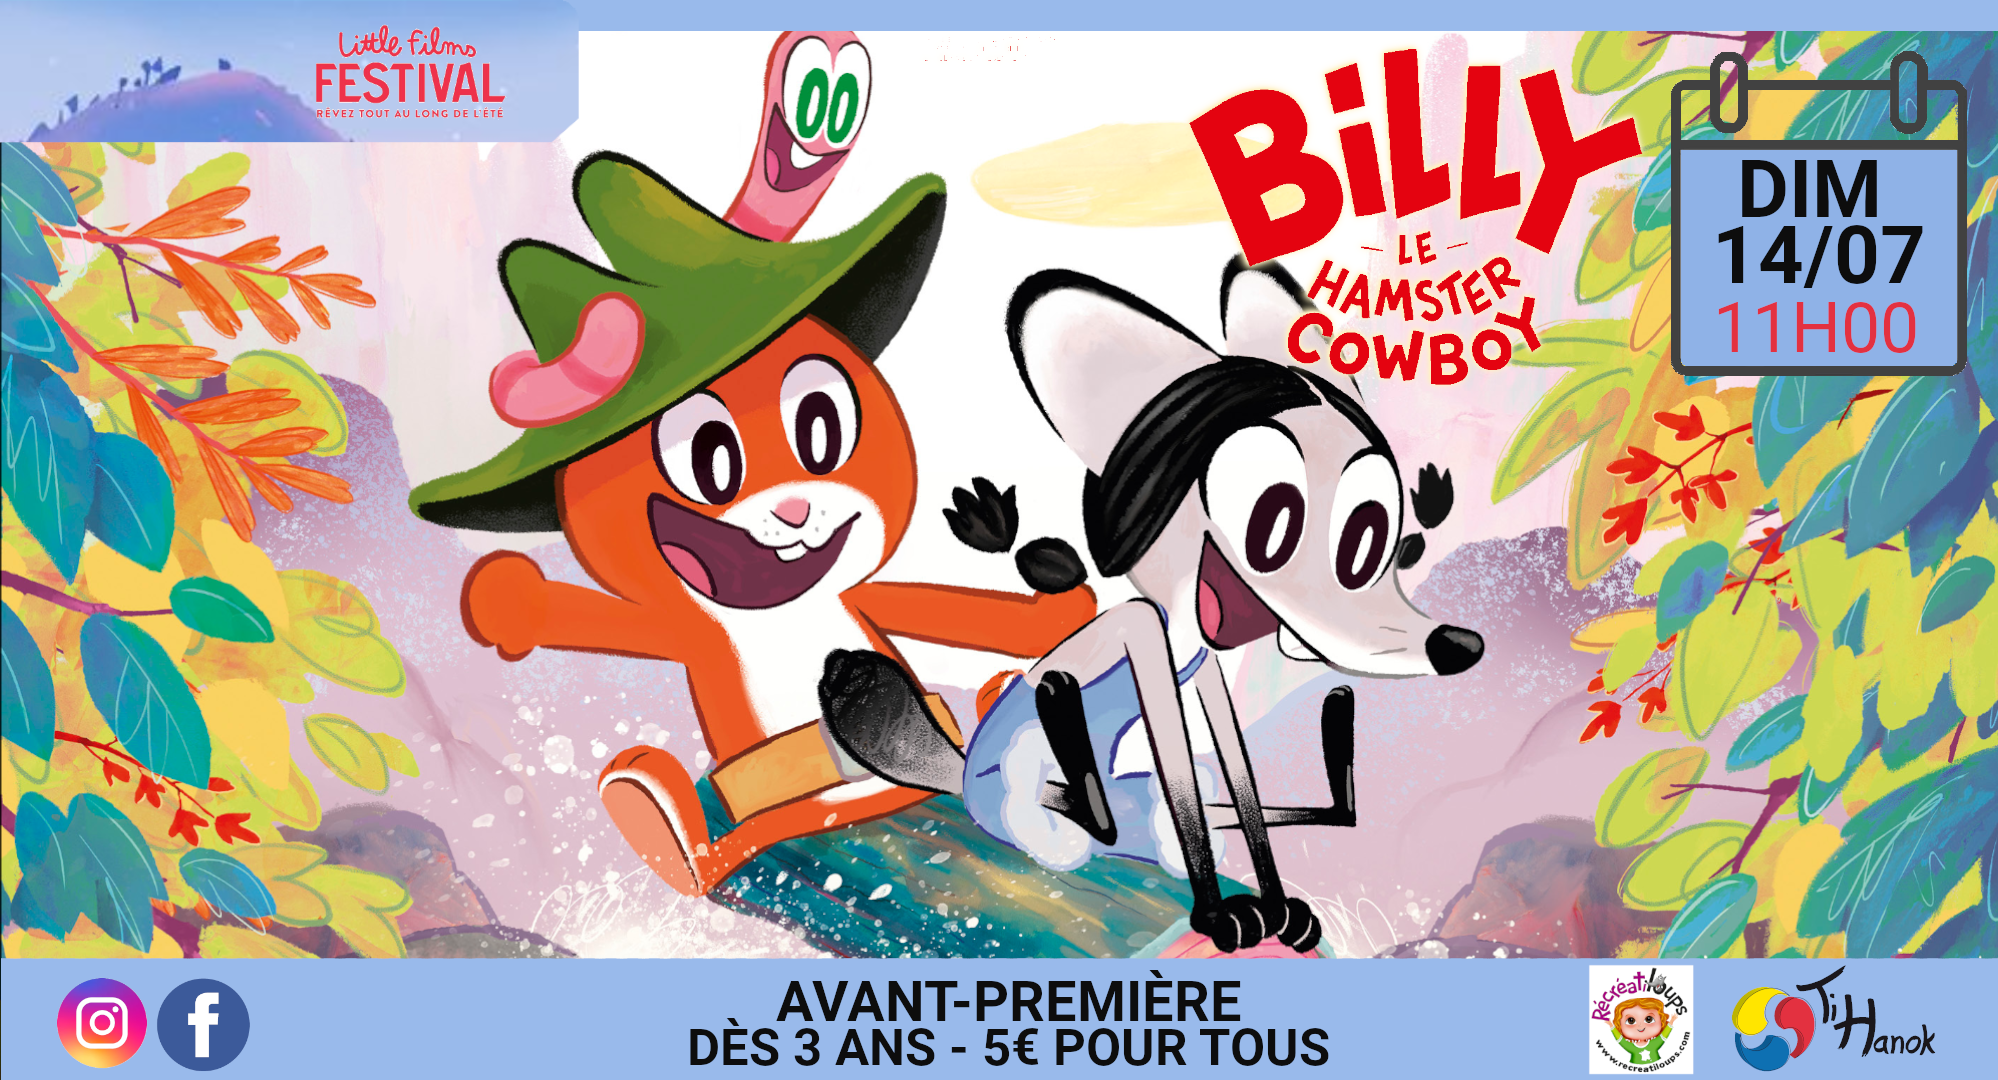 Little film festival : Billy le hamster cowboy